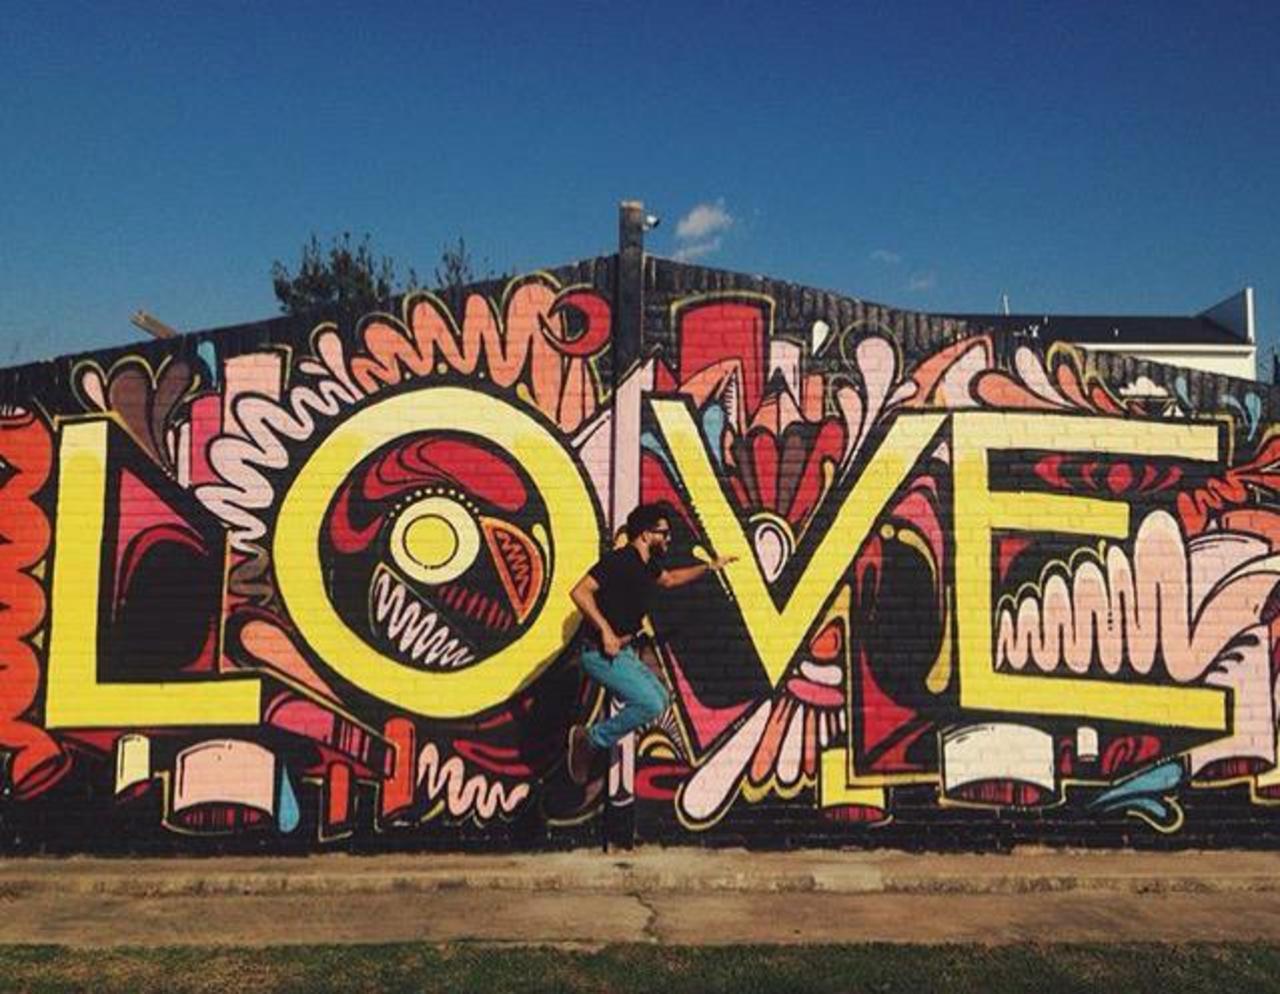 RT @GoogleStreetArt: Love ❤️
Street Art by WileyArt

#art #graffiti #mural #streetart http://t.co/faKoz7W389